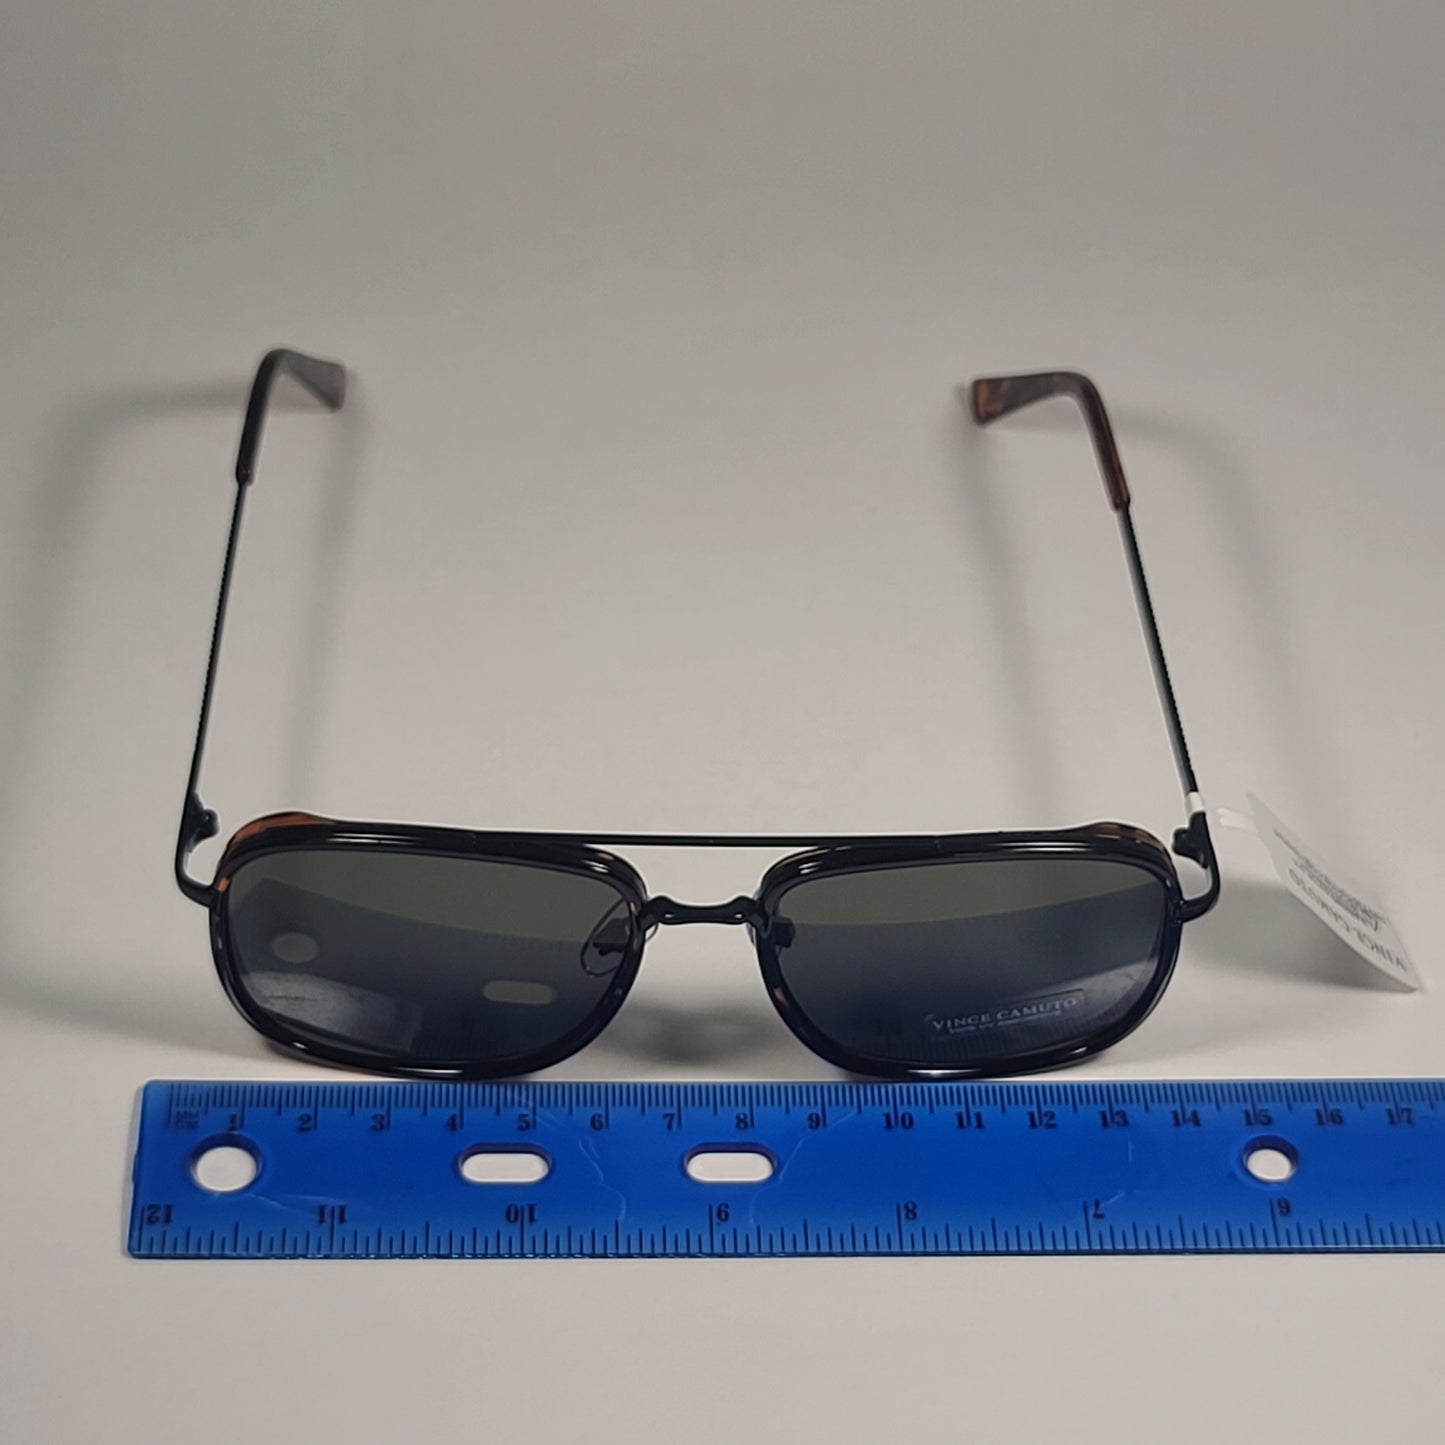 Vince Camuto VM601 BKTS Navigator Sunglasses Black Tortoise Frame Green Lens - Sunglasses